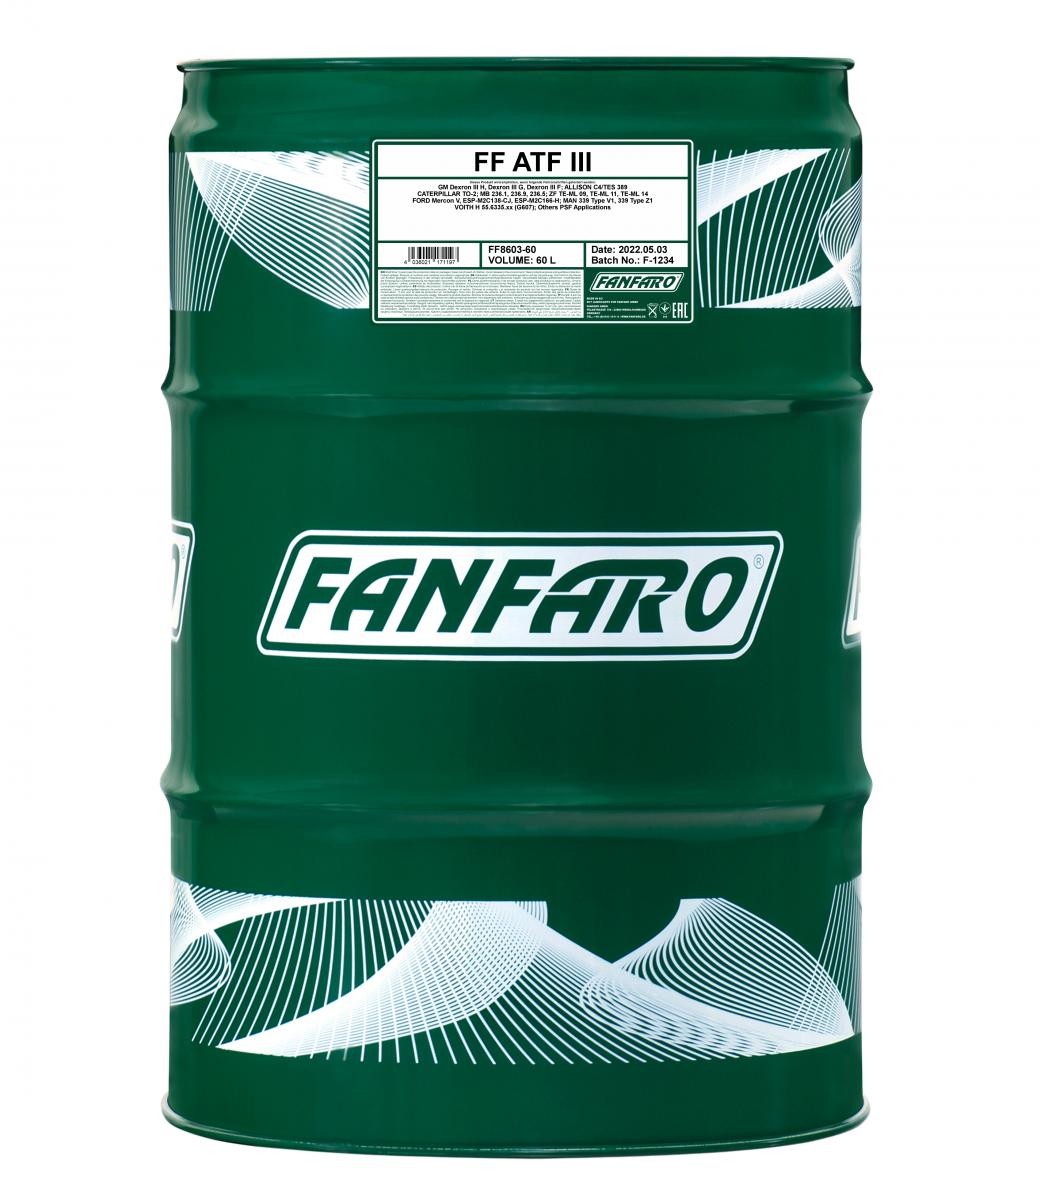 FF8603-60 FANFARO Automatikgetriebeöl RENAULT TRUCKS D-Serie